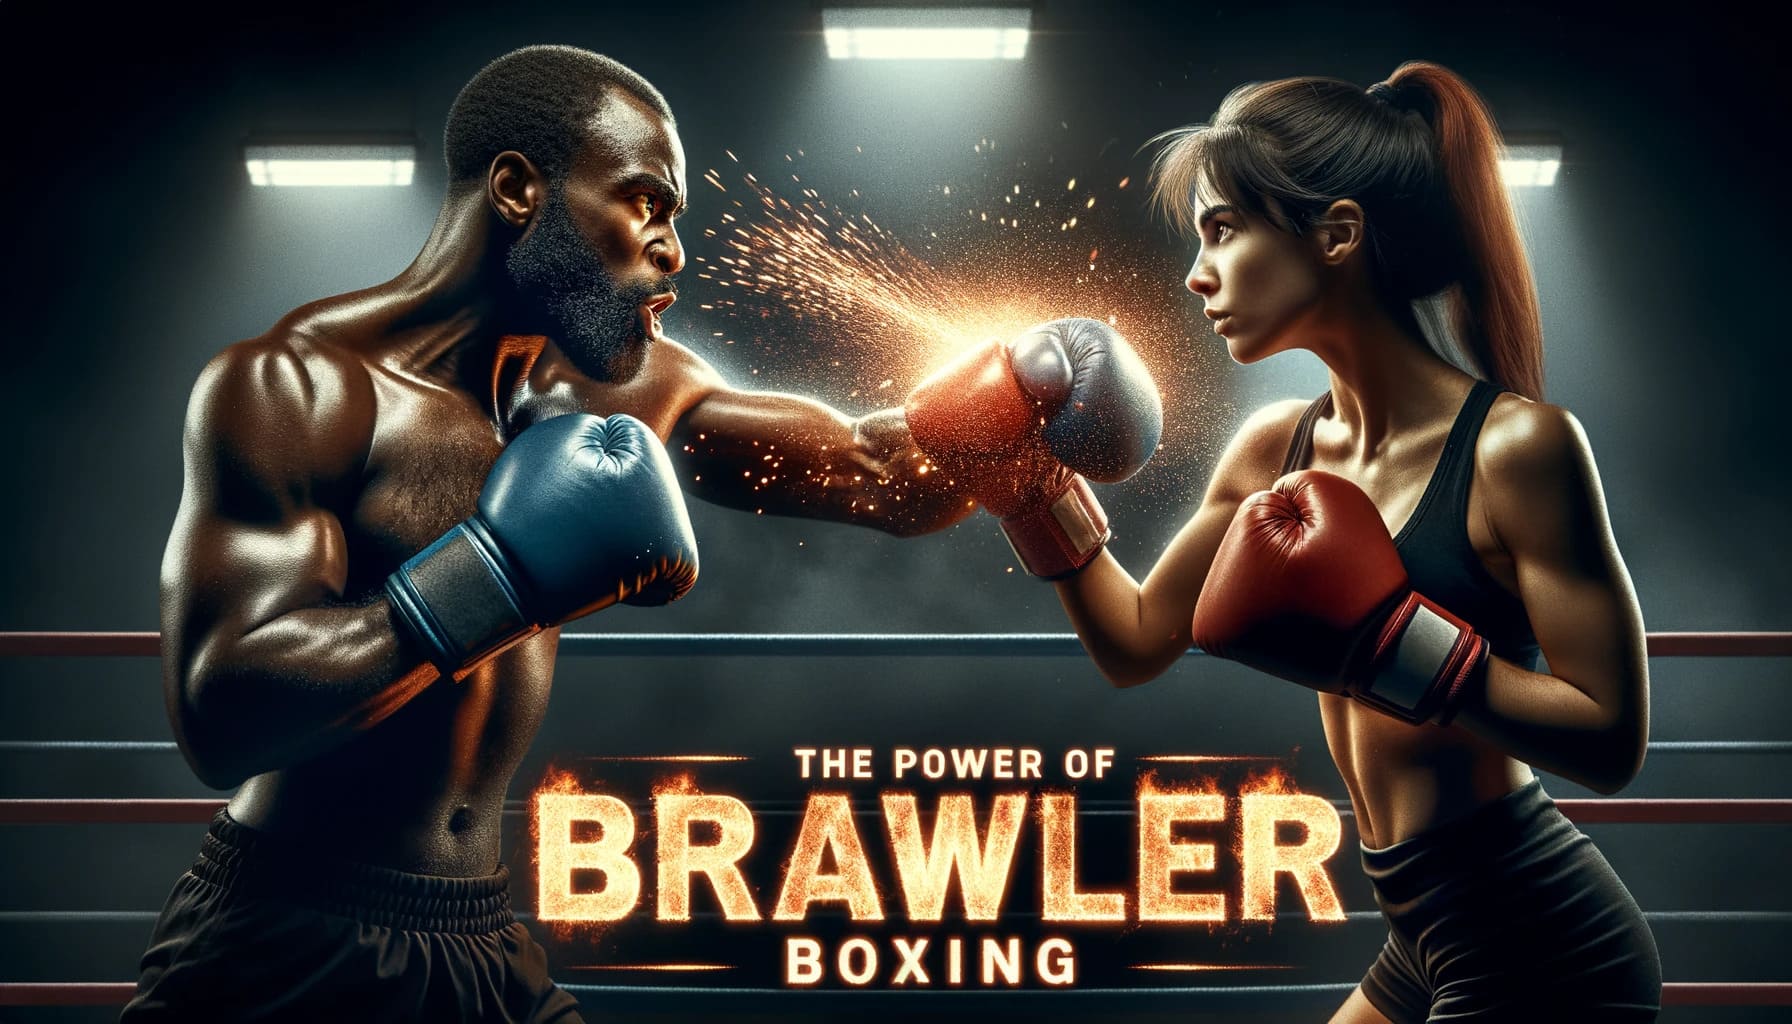 Brawler boxing style thumbnail